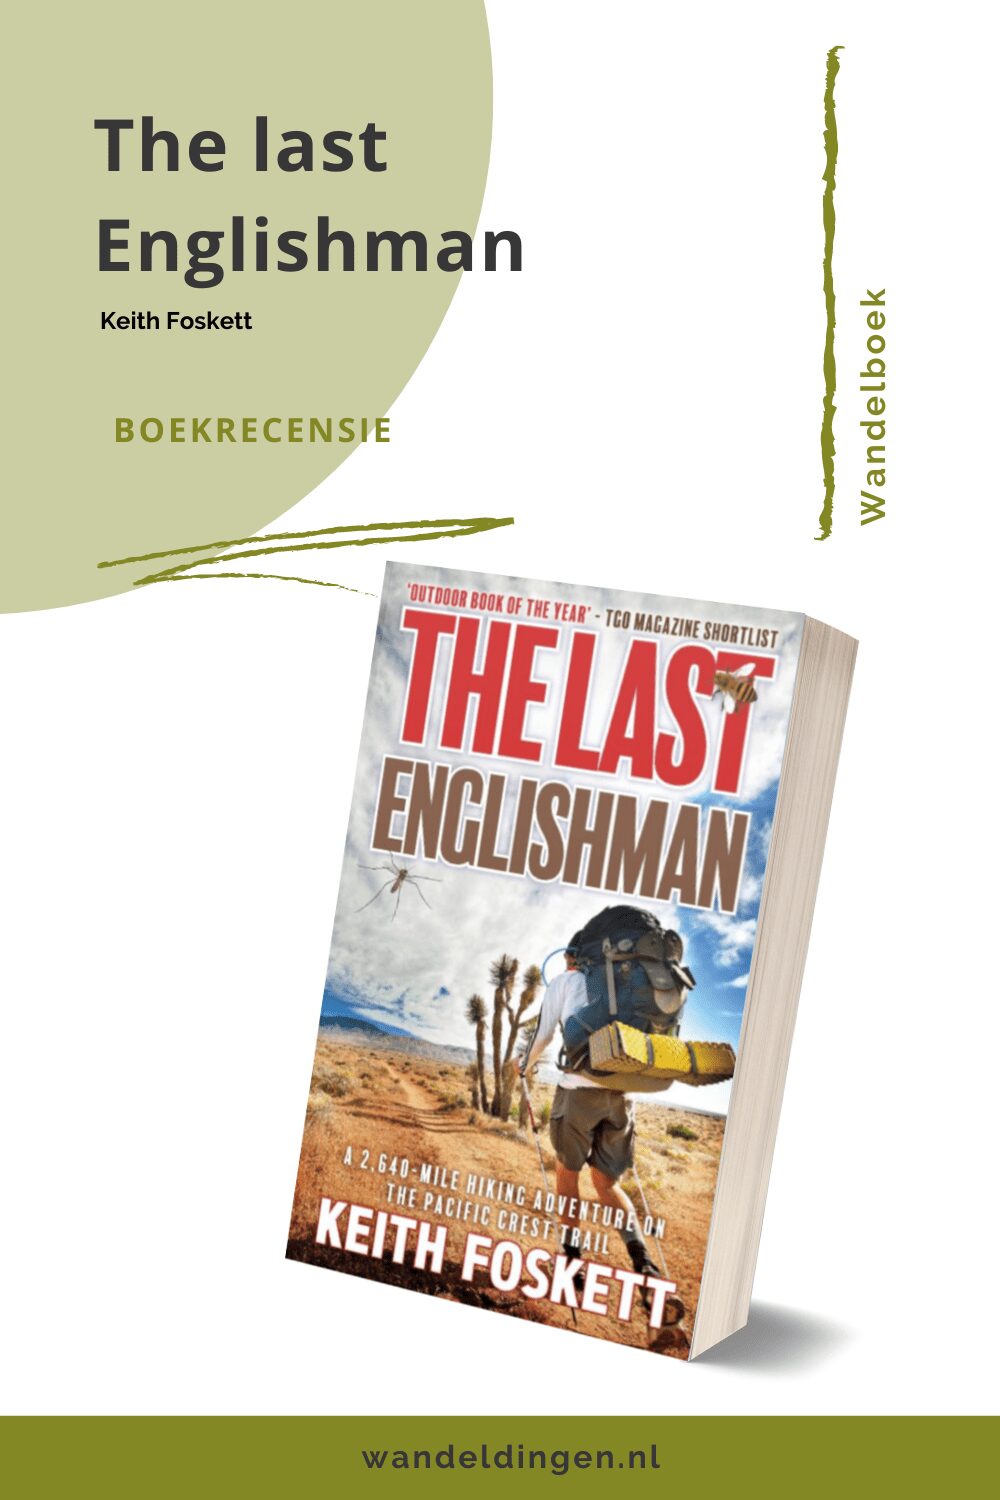 The last Englishman